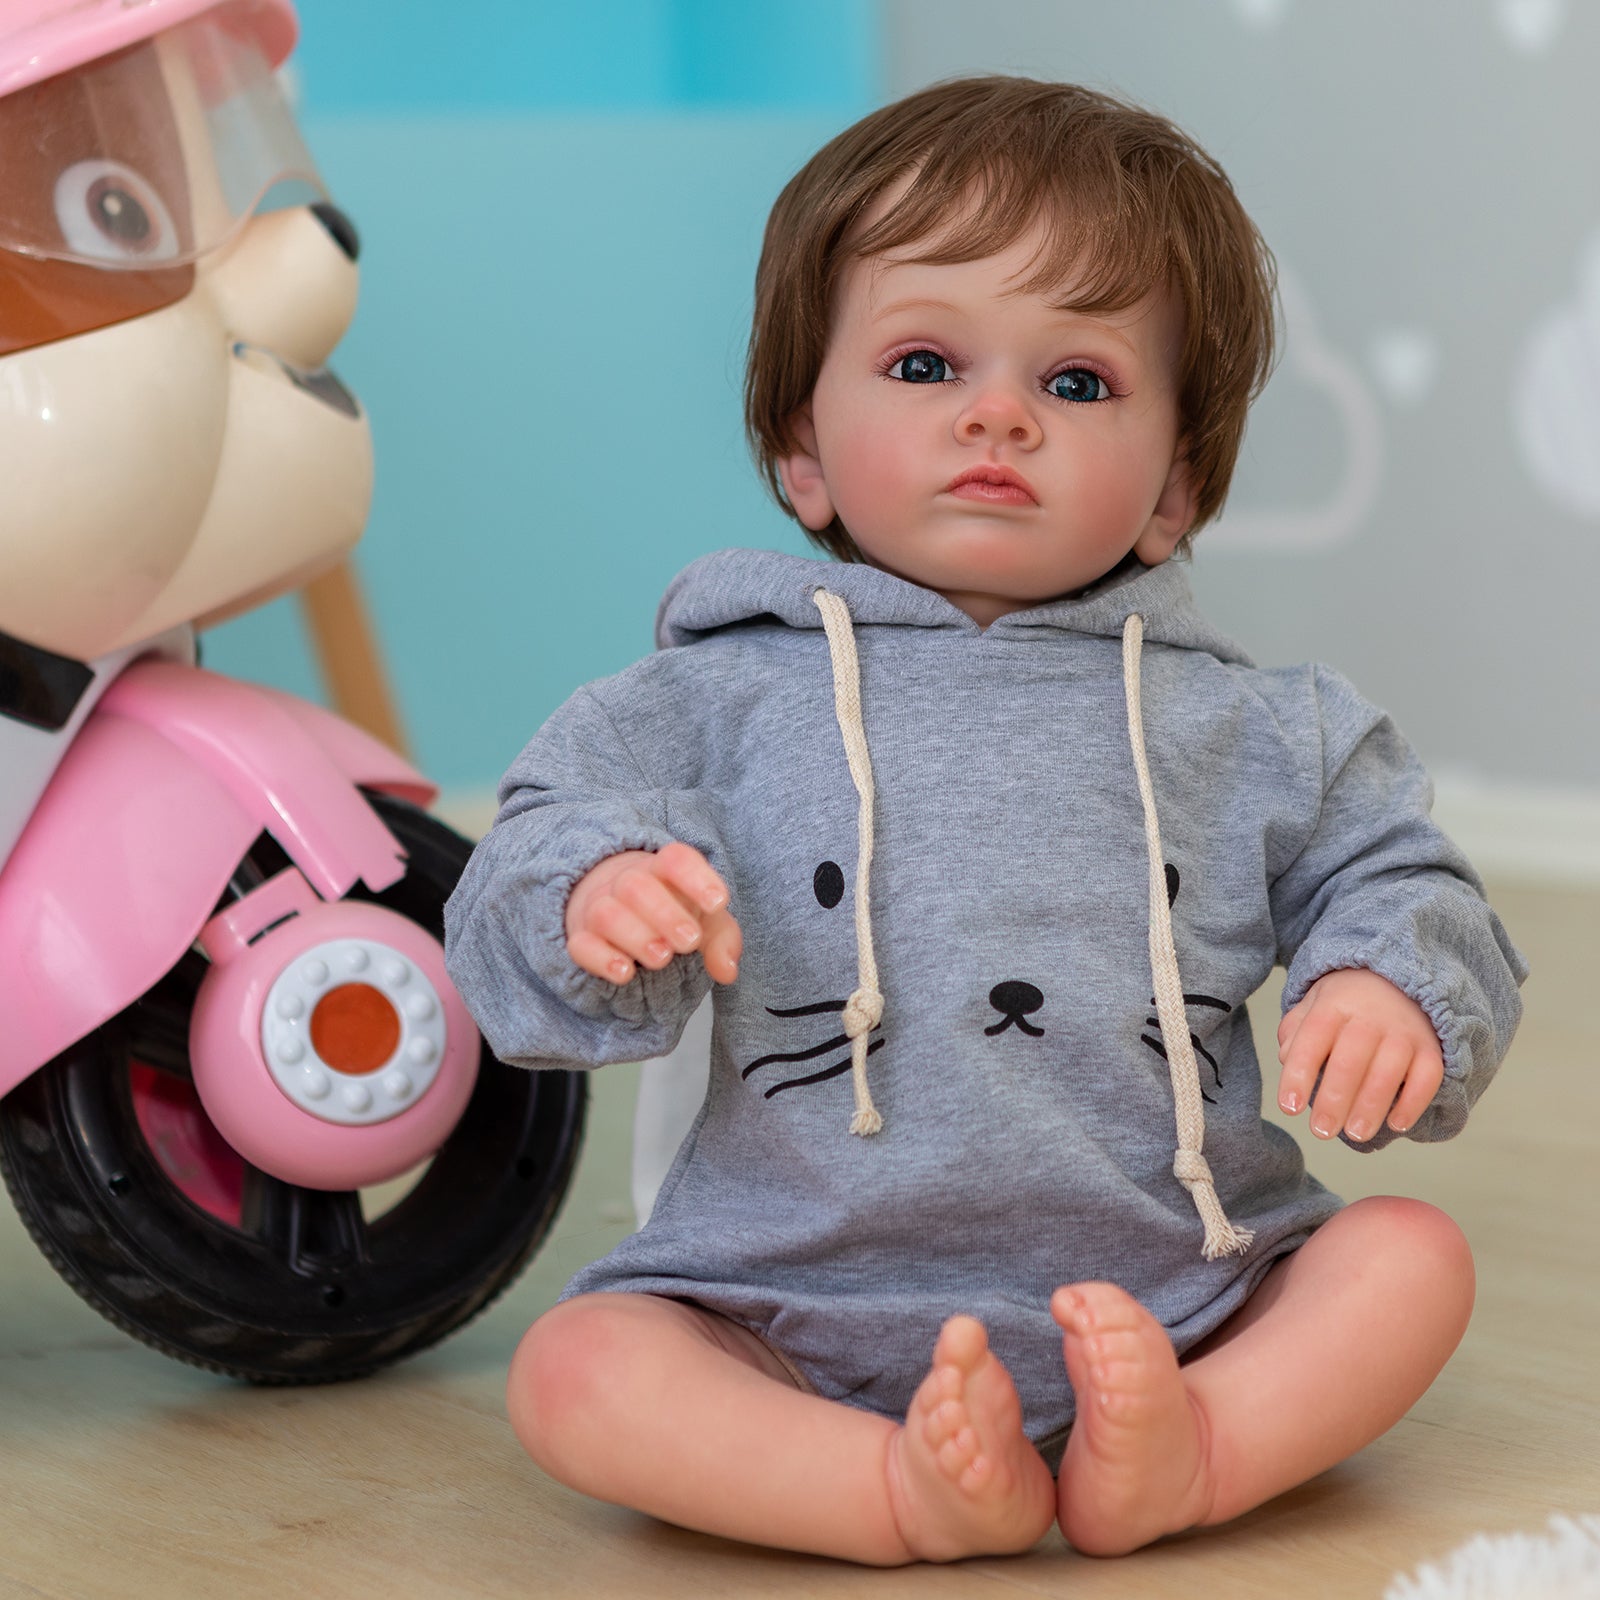 Enjoyin 4 inch Mini Baby Dolls Playset Includes 6 Soft Baby Dolls and A Storage Bag Realistic Looking Small Baby Dolls Set Fo